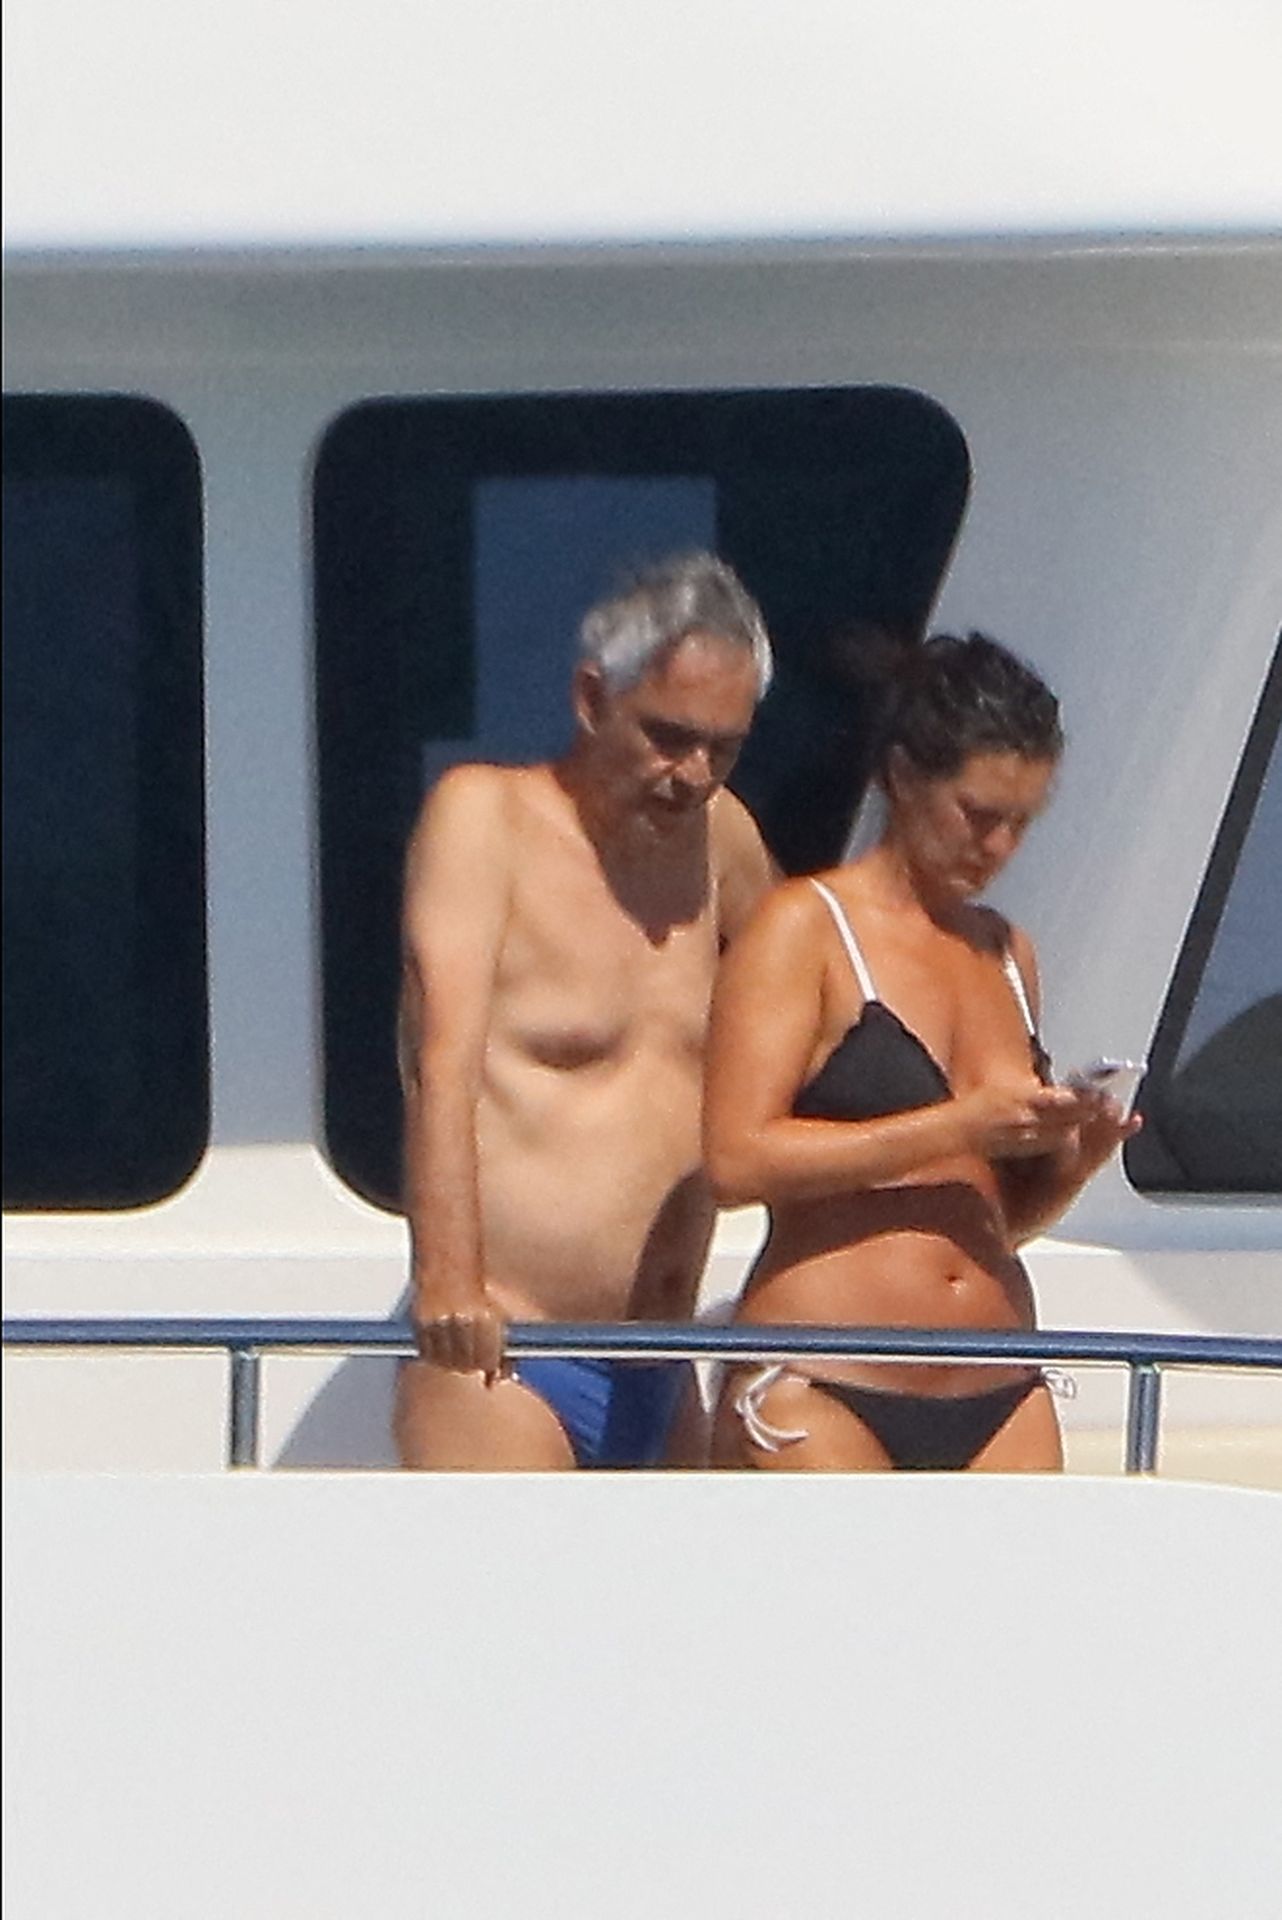 Andrea Bocelli & Veronica Berti Enjoy Their Holiday in St Tropez (19 Photos)